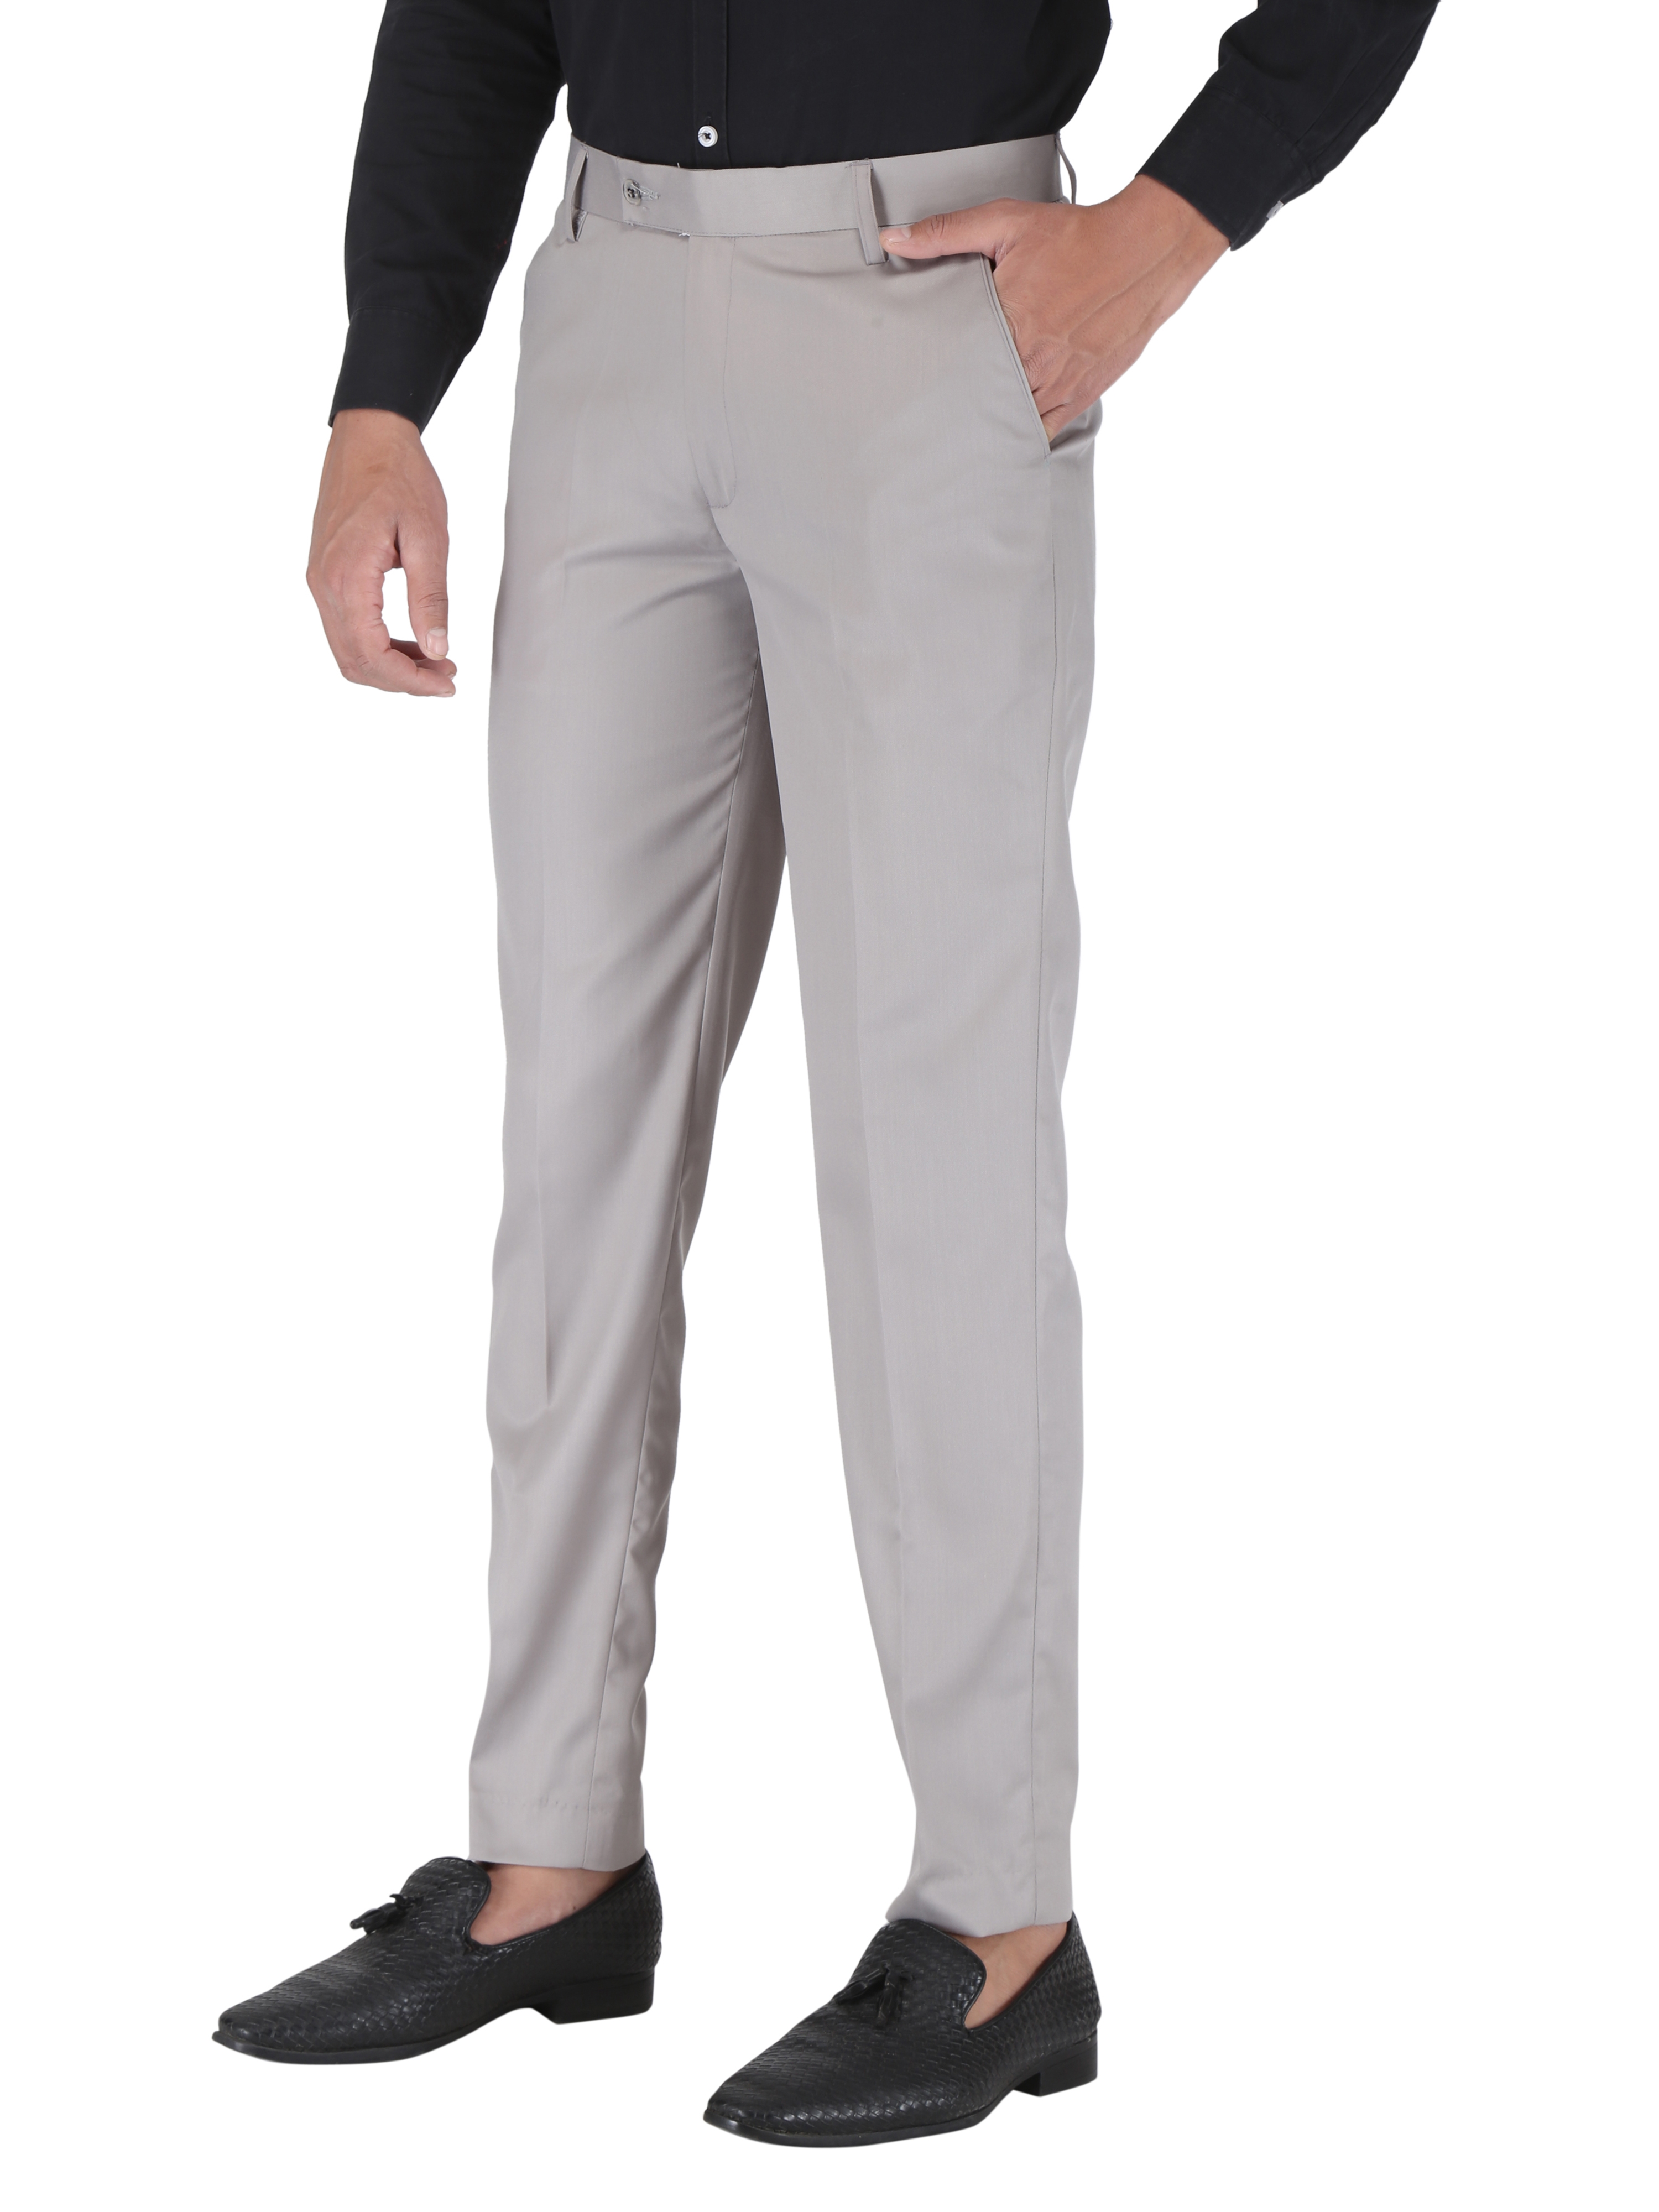 CHARLIE CARLOS | Grey Light Men's Contemporary Reguler Leg Business Pants in Virgin PolyViscose Regular Fit Formal Trousers/Pants